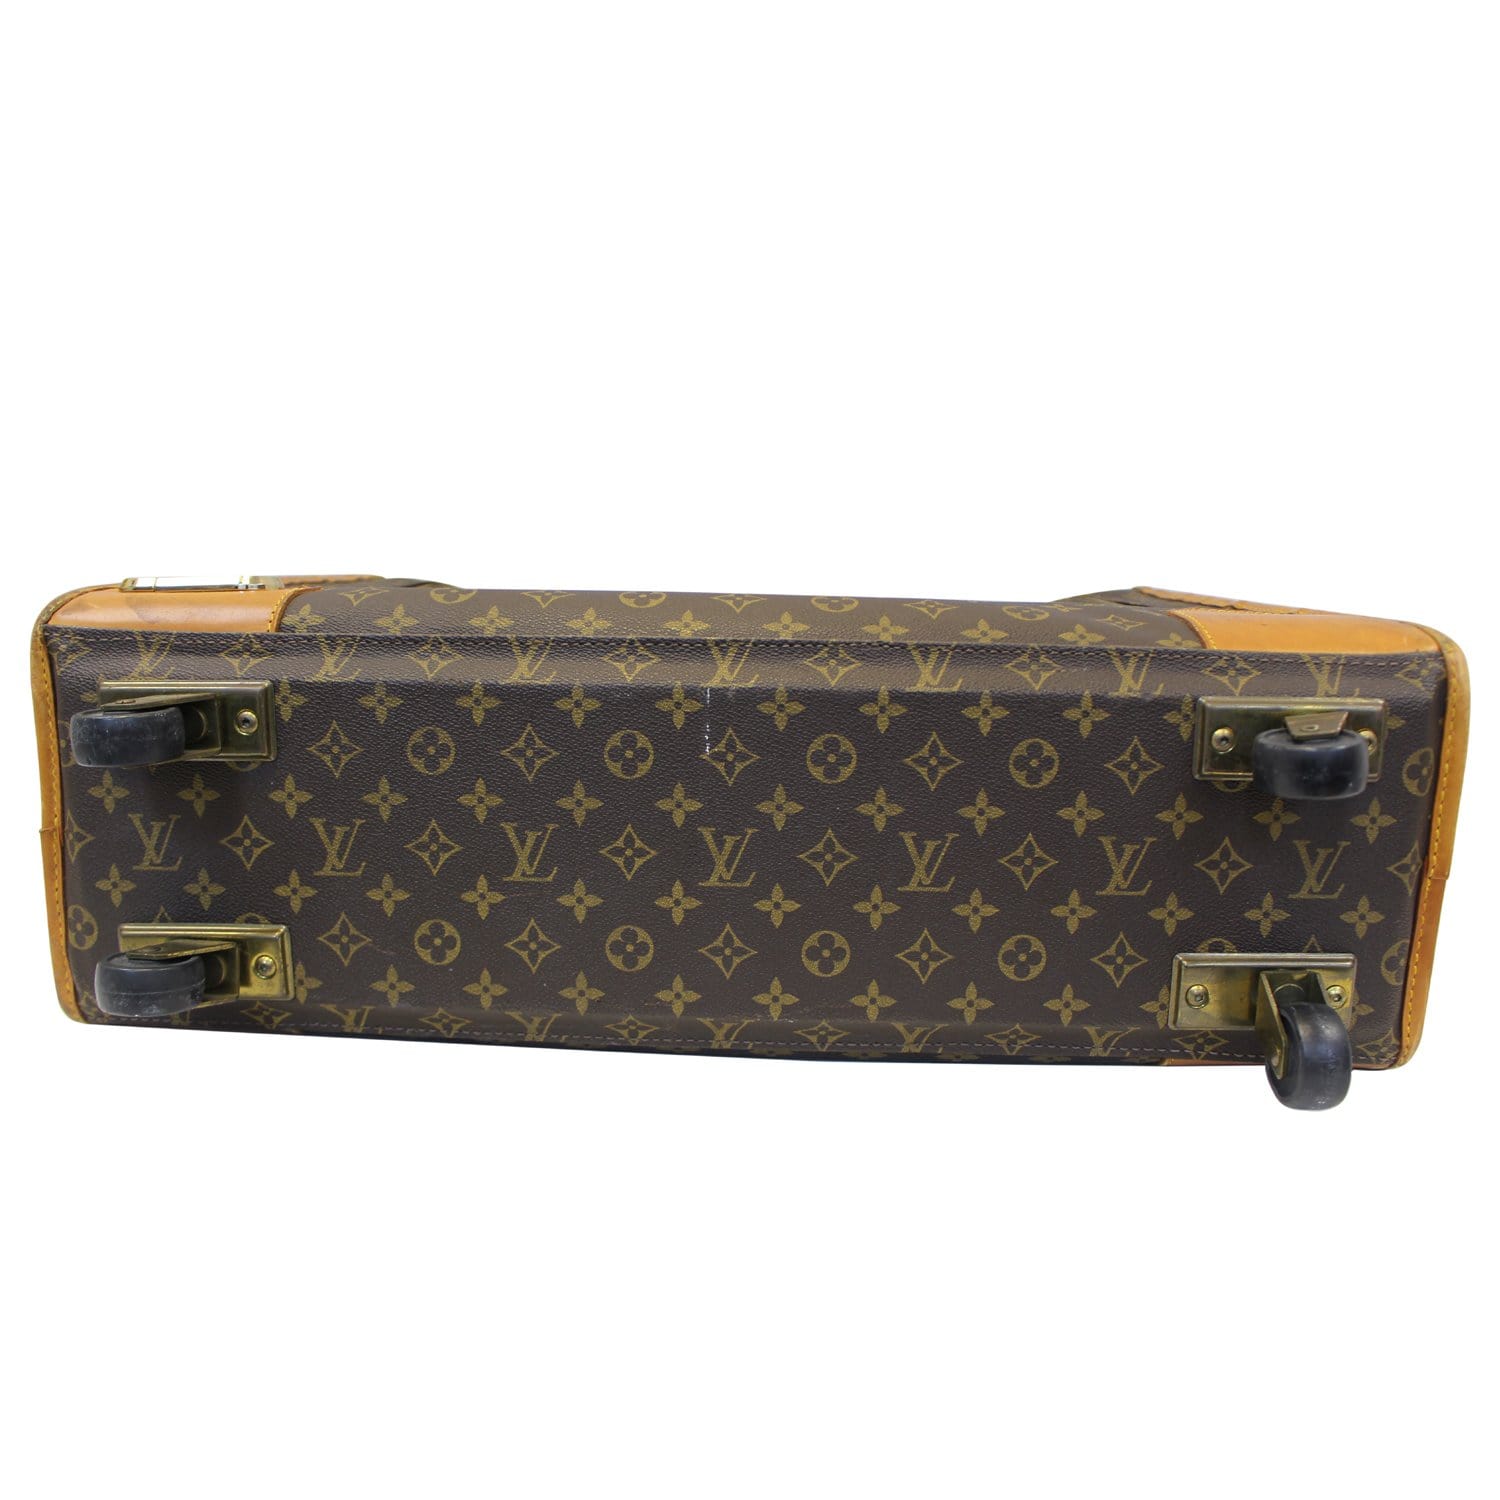 Lot - A Louis Vuitton monogram Pullman soft-sided suitcase 1980s